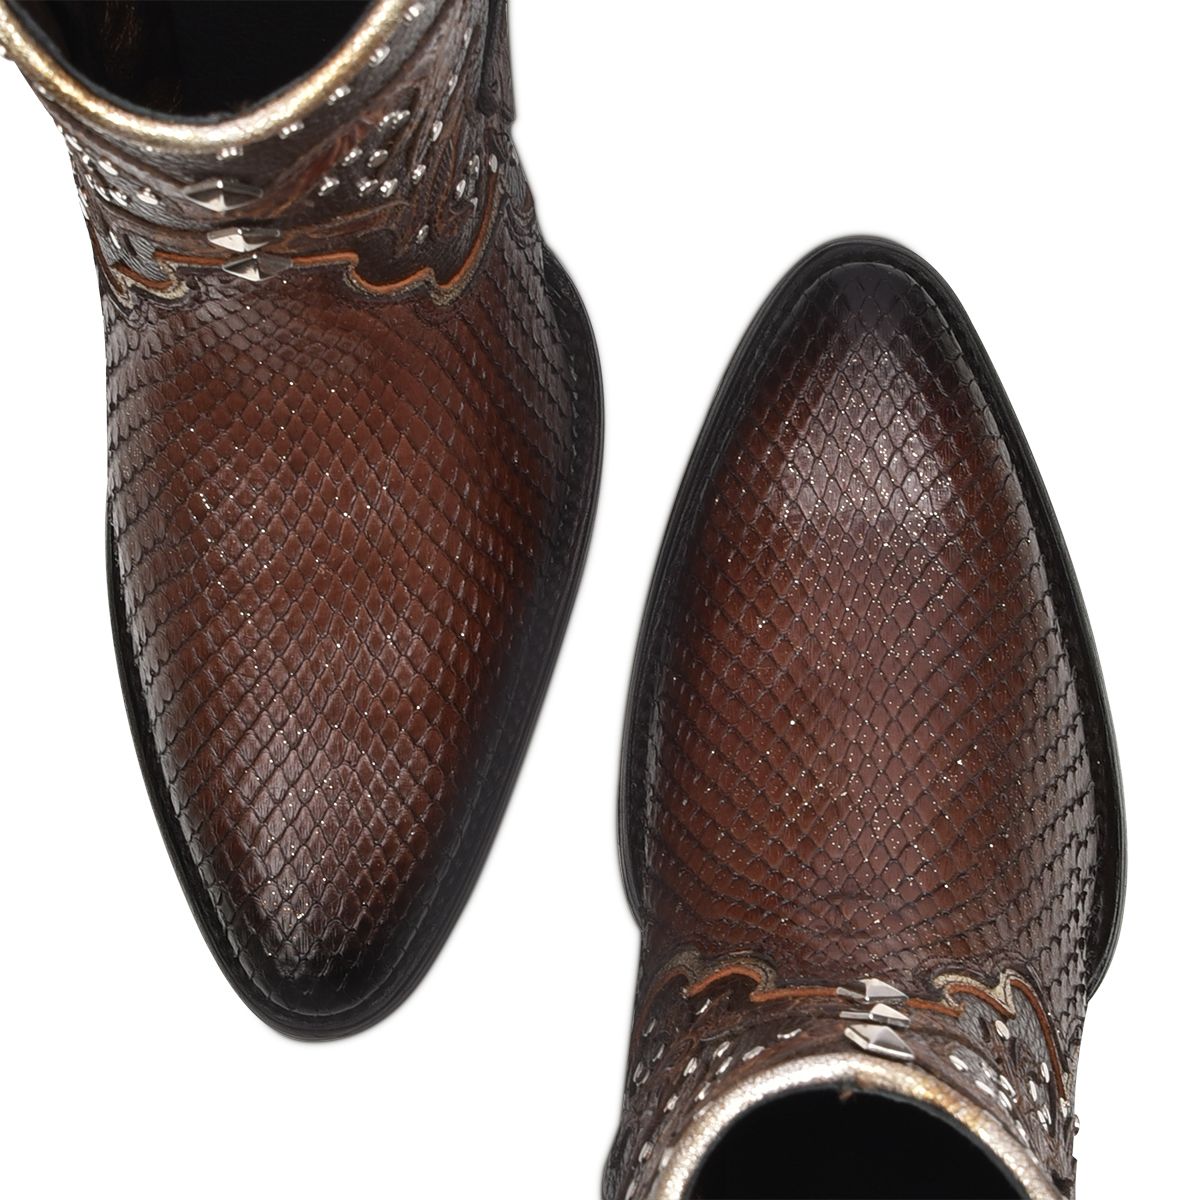 4A22PM - Cuadra mocca cowboy western python ankle boots for women-CUADRA-Kuet-Cuadra-Boots